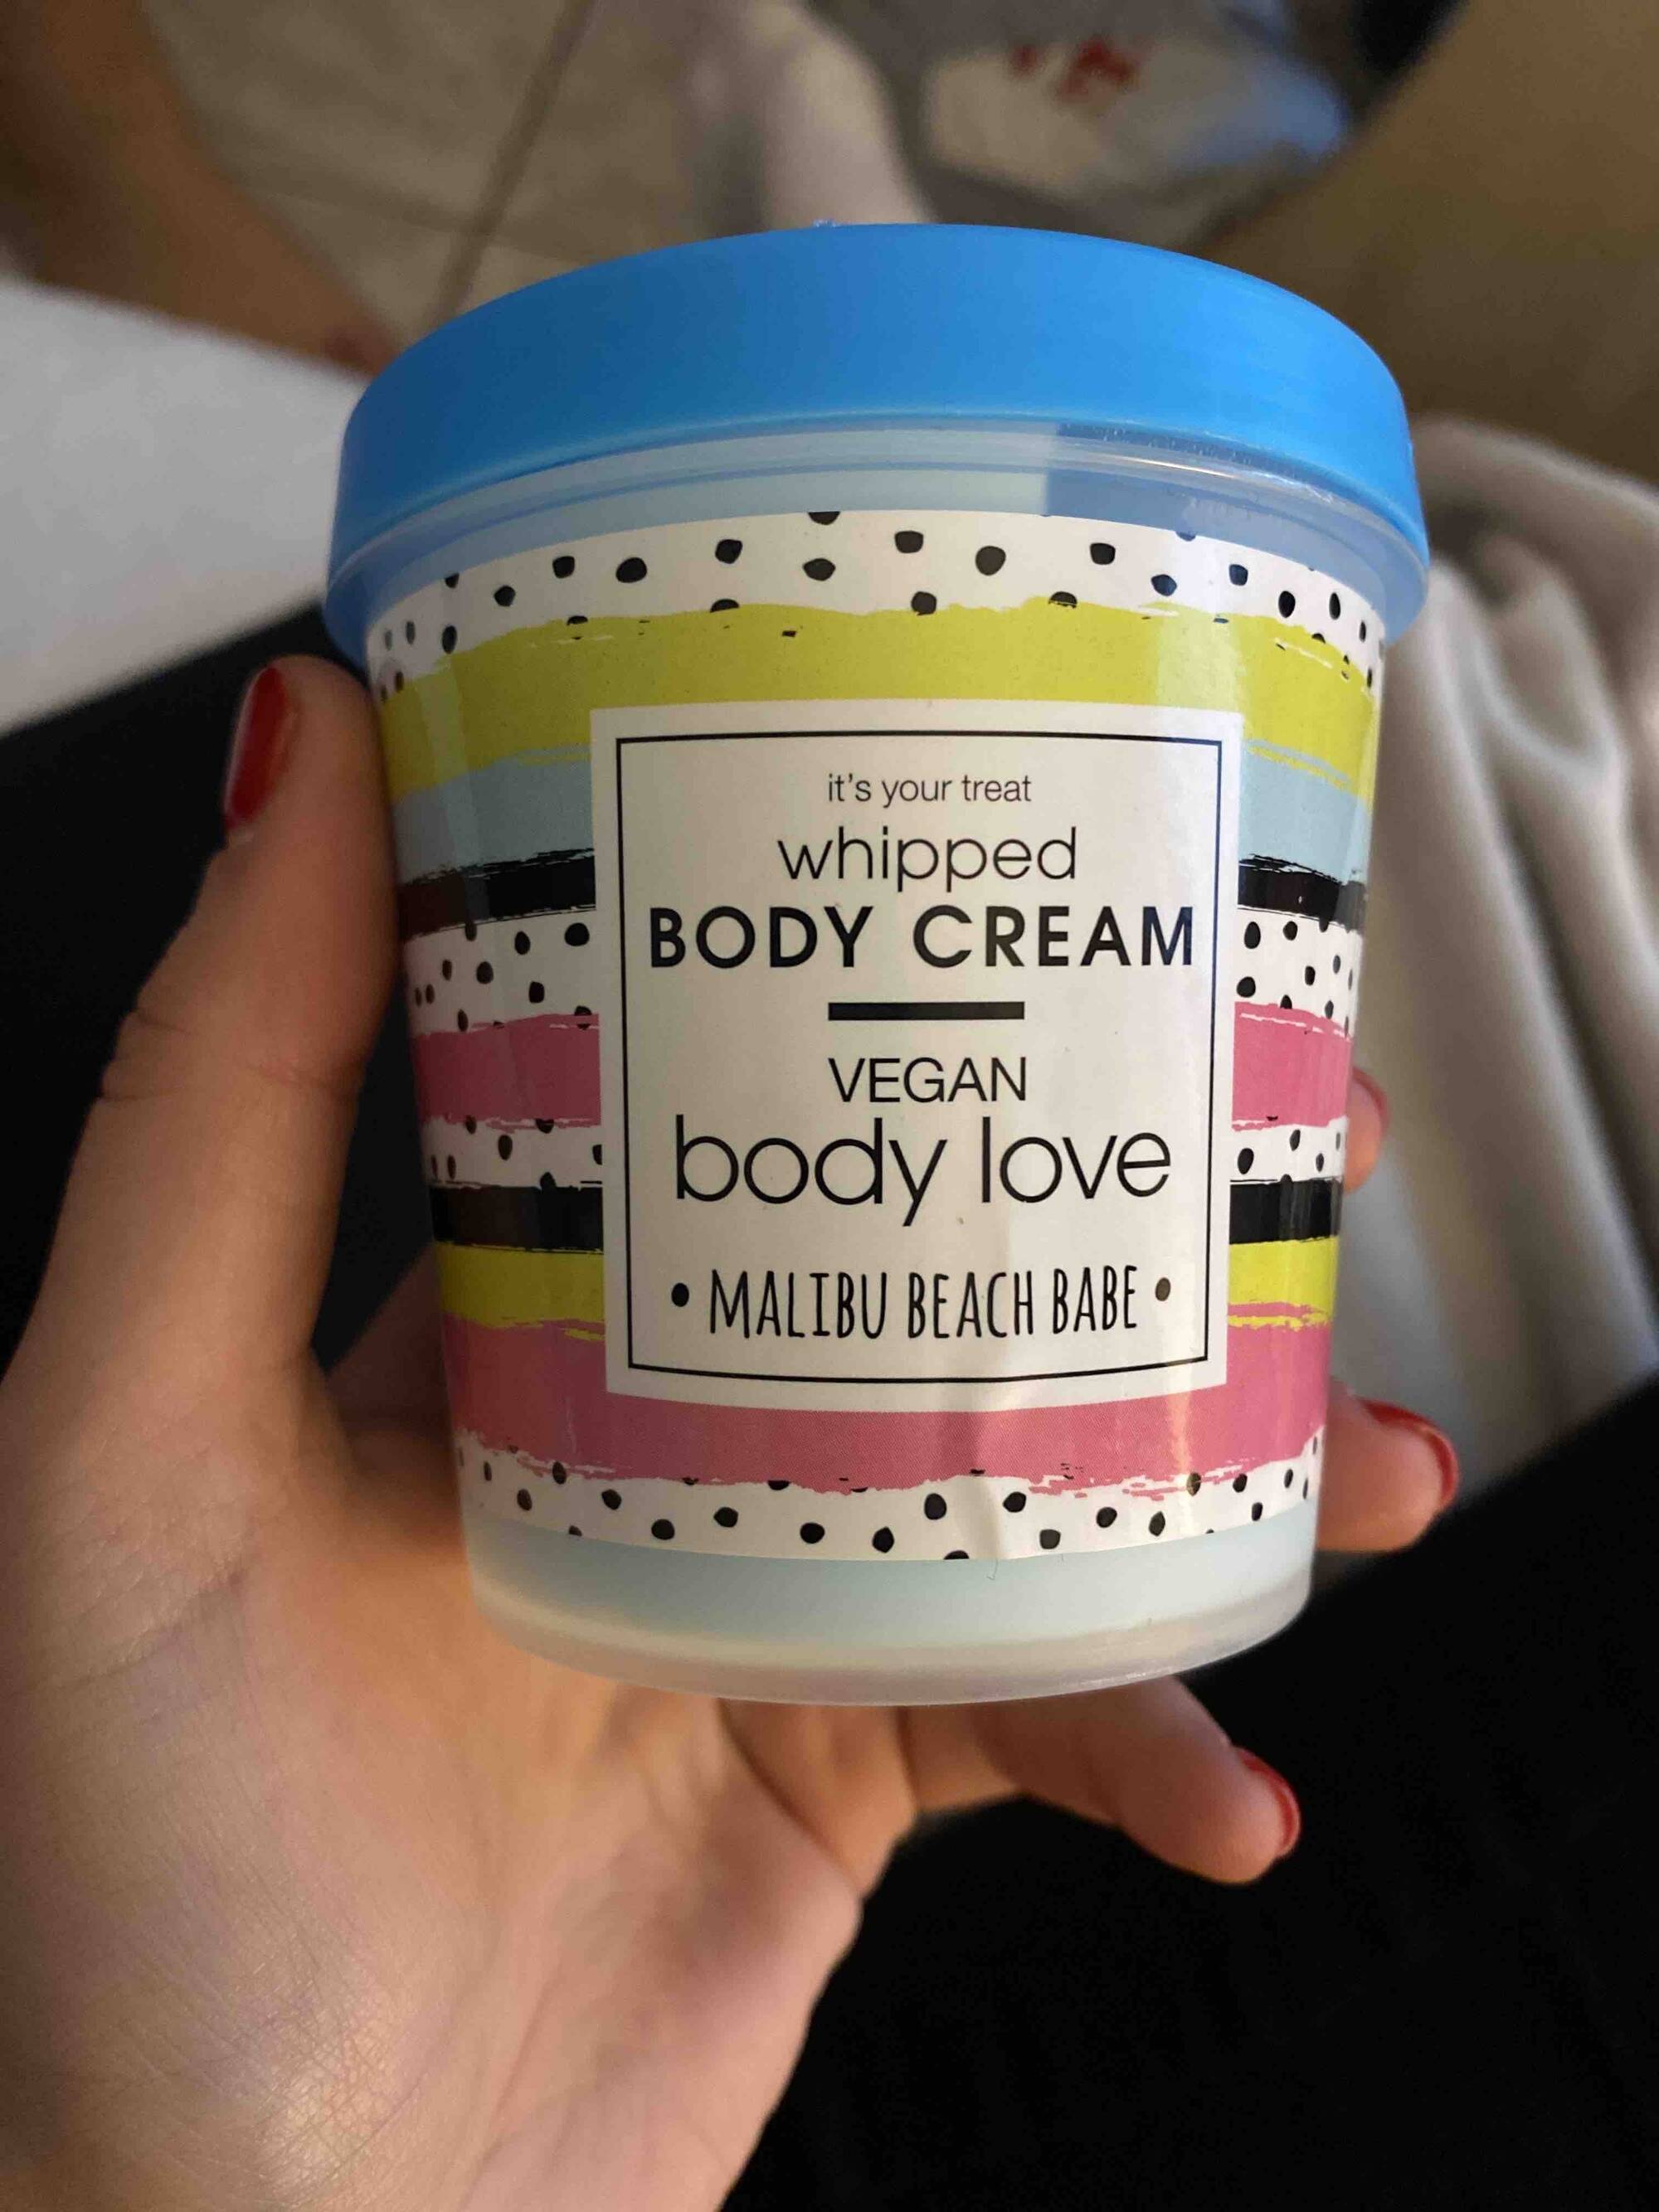 MAXBRANDS - Body cream